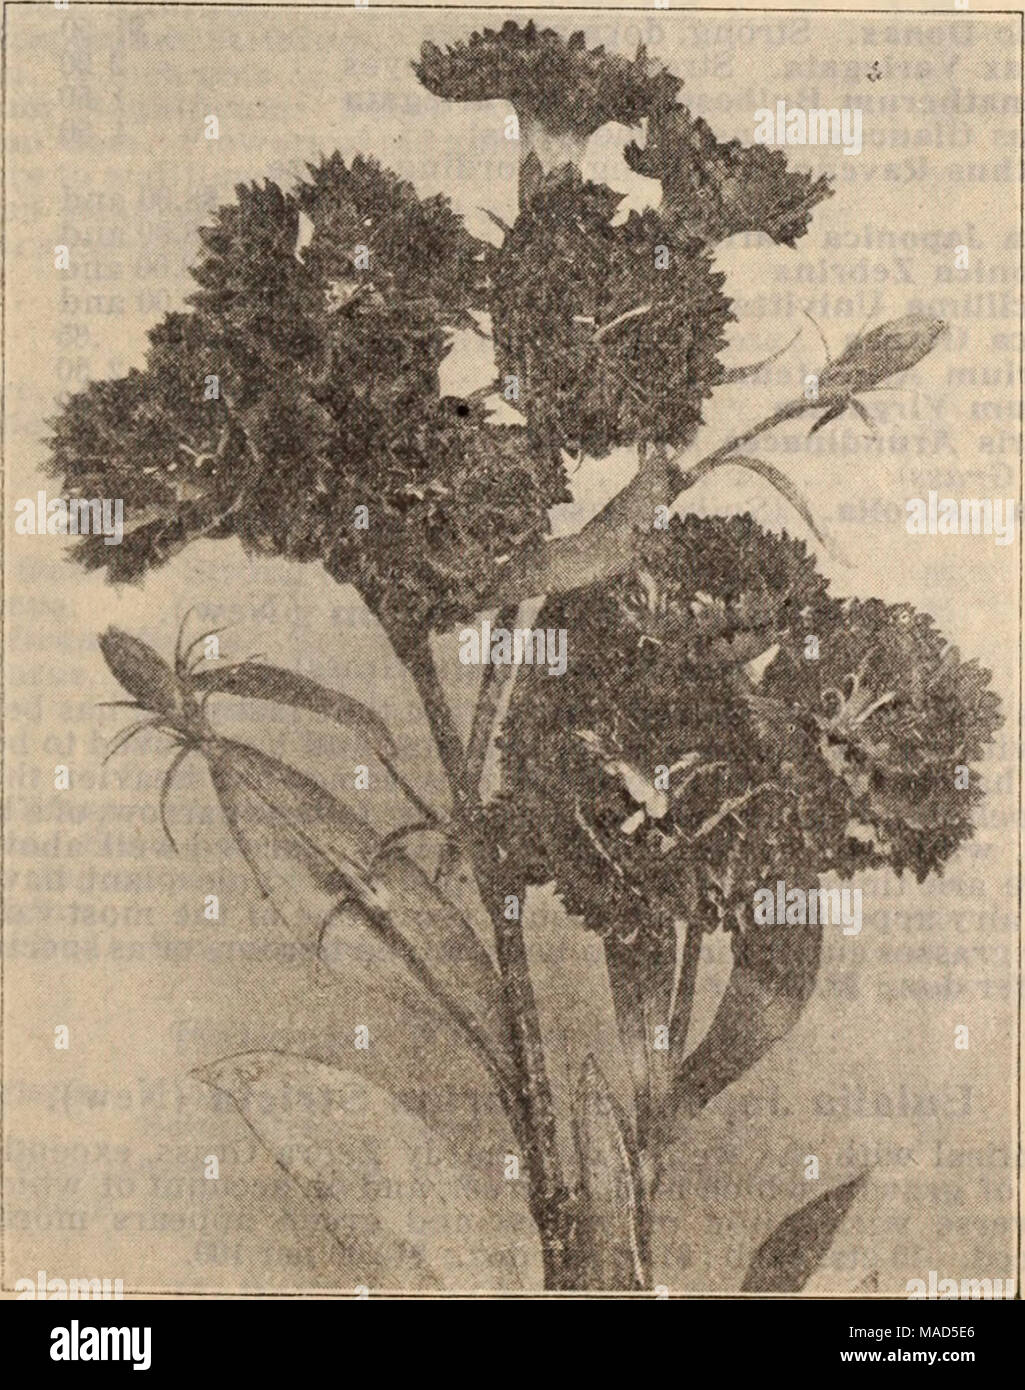 . Dreer's wholesale price list / Henry A. Dreer. . Dodecatheon (American Cowslip or Shooting Star). Meadia .... i 25 Doronicum (Leopard's Bane). Caucasicum. 3-inch pots 1 25 Clusii. 3-inch pots 1 25 Excelsum. 3-inch pots 1 25 Draba (Whitlow Grass). Androsacea. 3-inch pots 1 25 Echinops (Globe Thistle). Banaticus. 3'/2-inch pots 1 25 Ritro. 4-inch pots 1 25 Ruthenicus. 3'/2-inch pots 1 25 Sphasrocephalus. 3'/2-inch pots 1 25 Eomecon (Eastern Poppy). Chionantha. 3-inch pots 1 50 Hirsutum. Epilobium (Willow-Herb). 3-inch pots DIANTHUS LATIFOLIUS ATROCOCCINEUS, FL. PL. Epimedium (Barrenwort or Bis Stock Photo